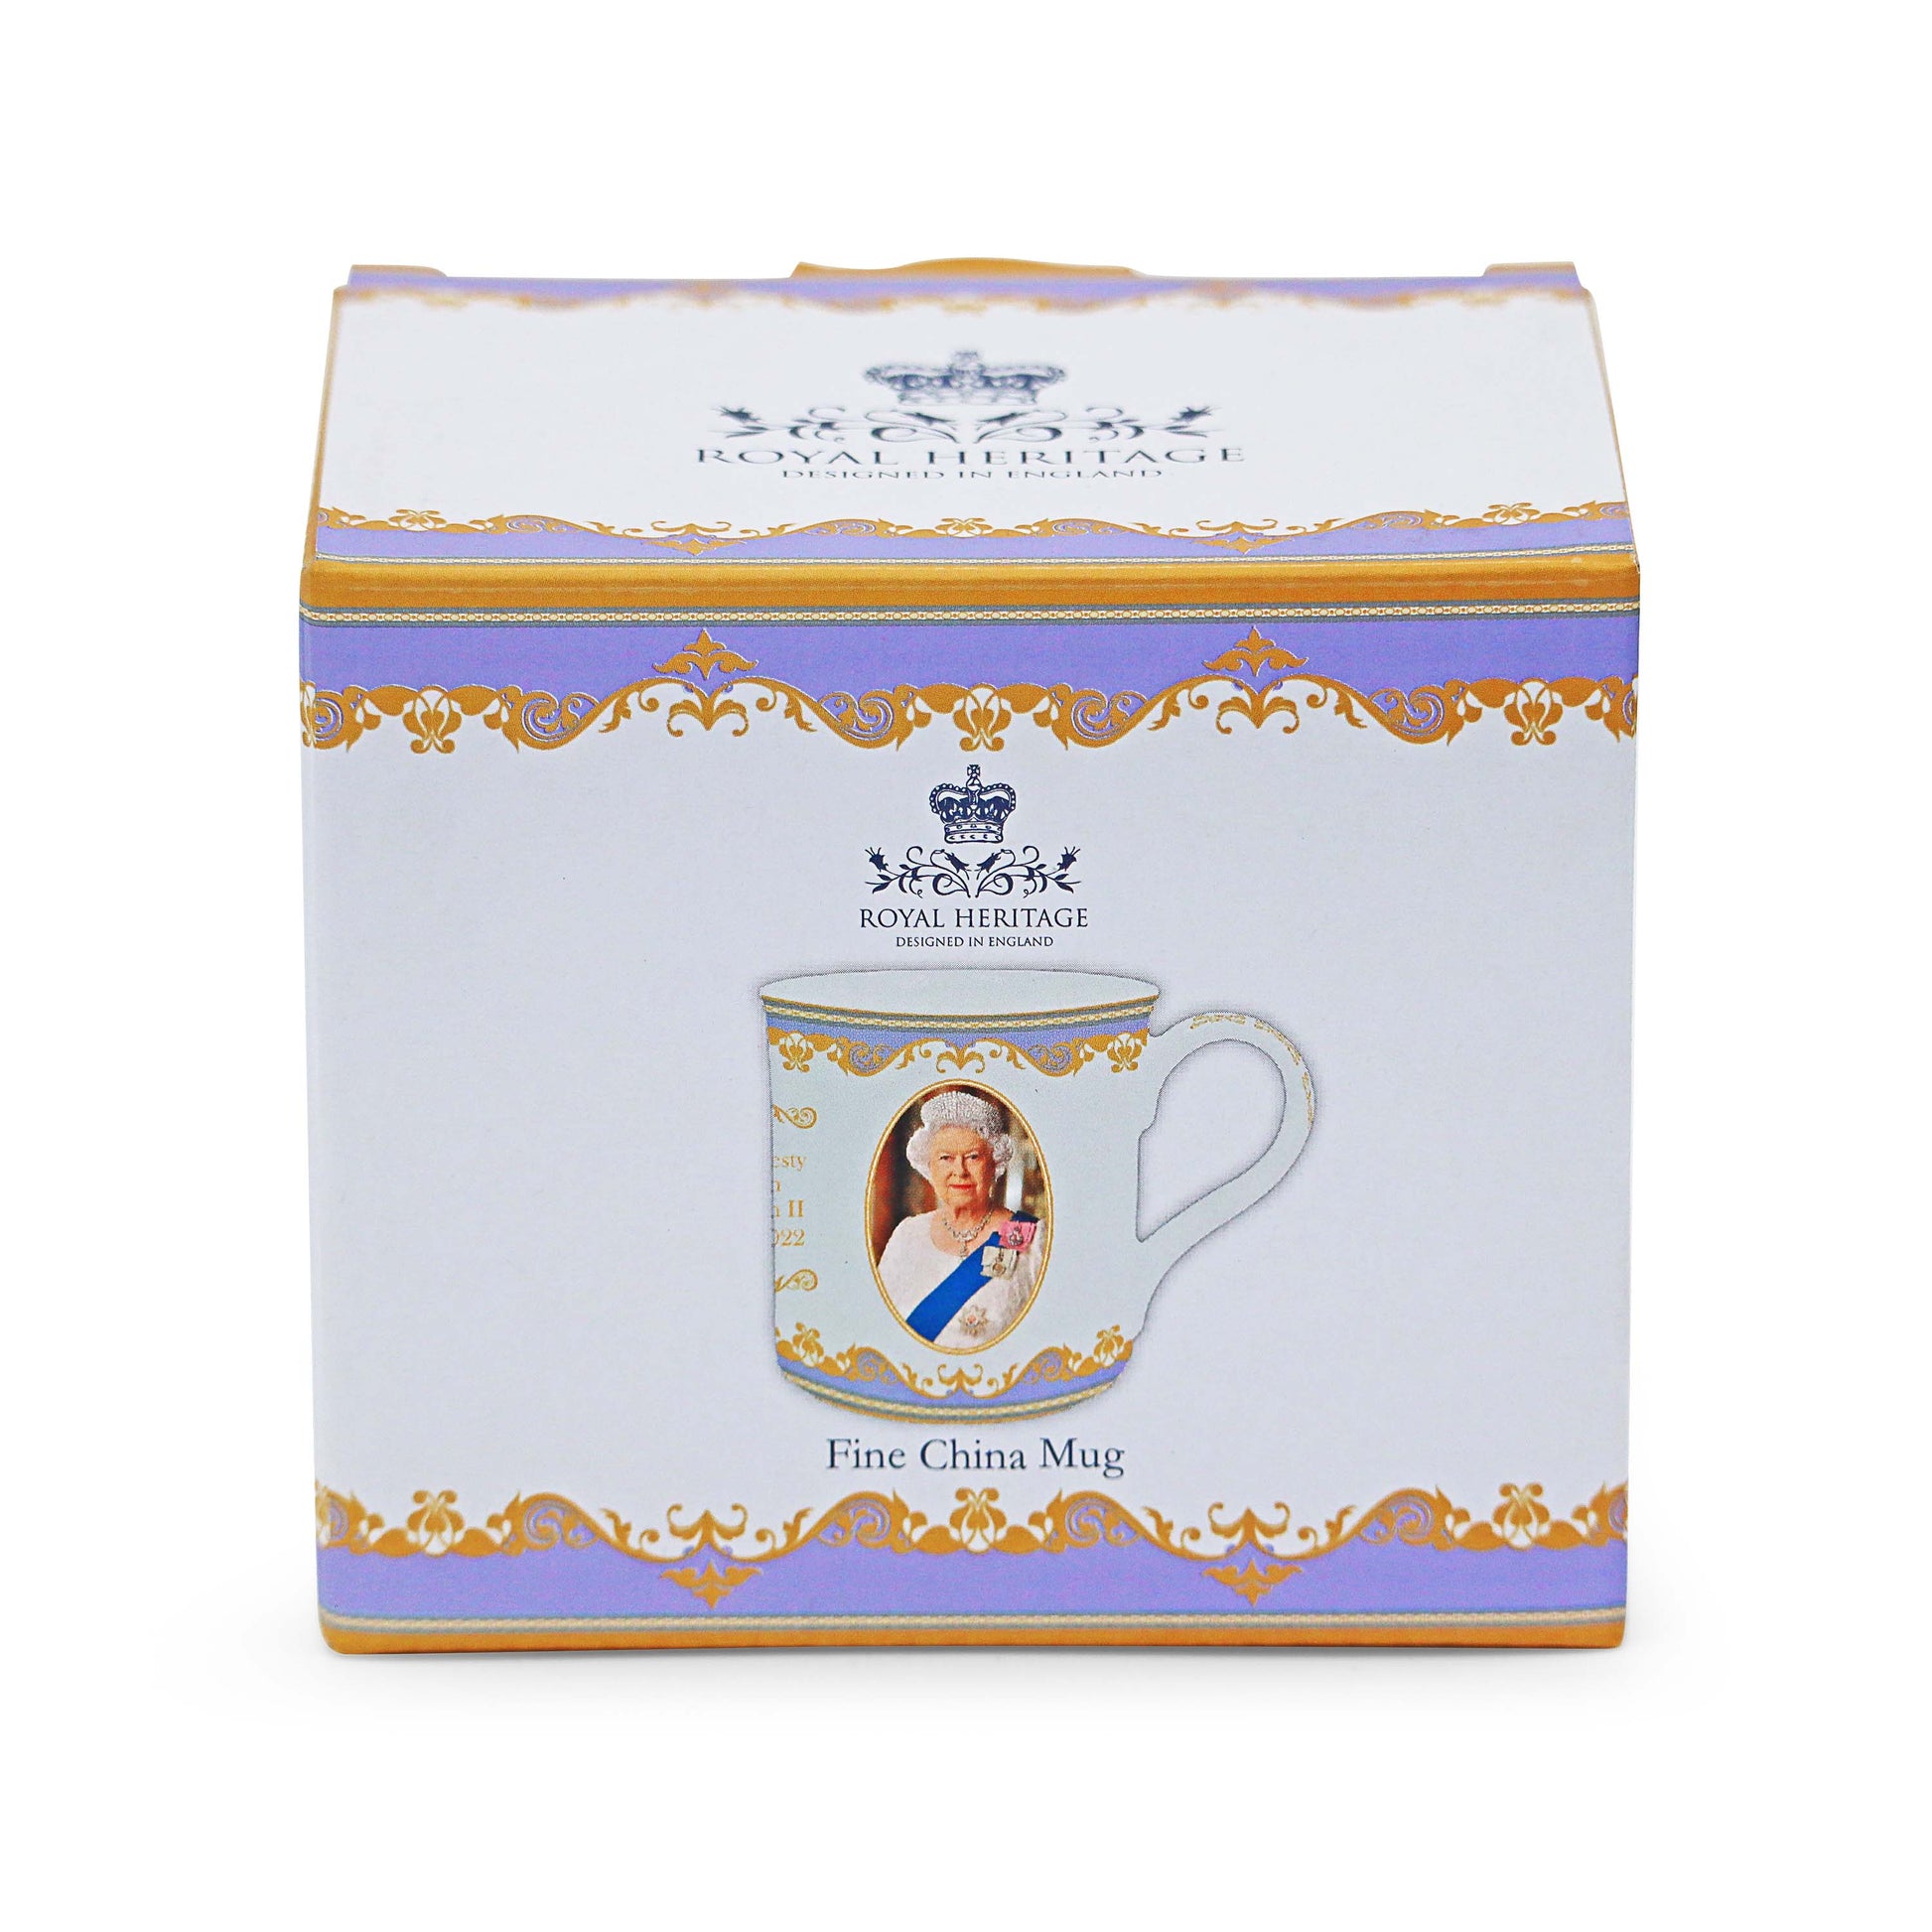 Her Majesty Queen Elizabeth II Commemorative Boxed Mug - Fine China Mug Gift